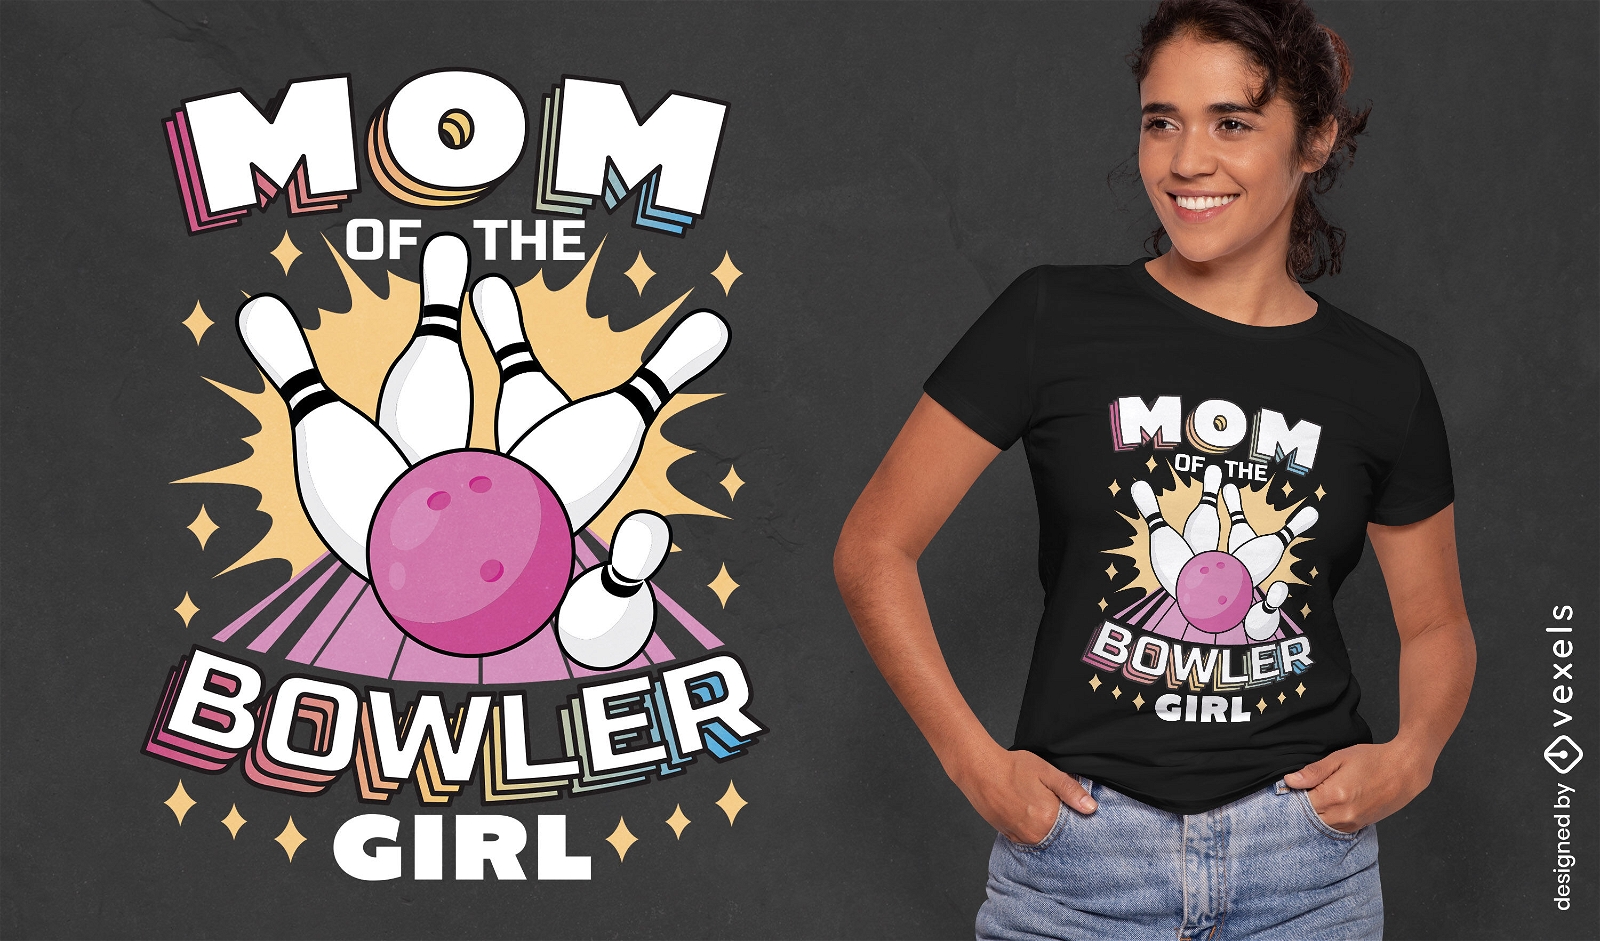 Bowling fun sport t-shirt design